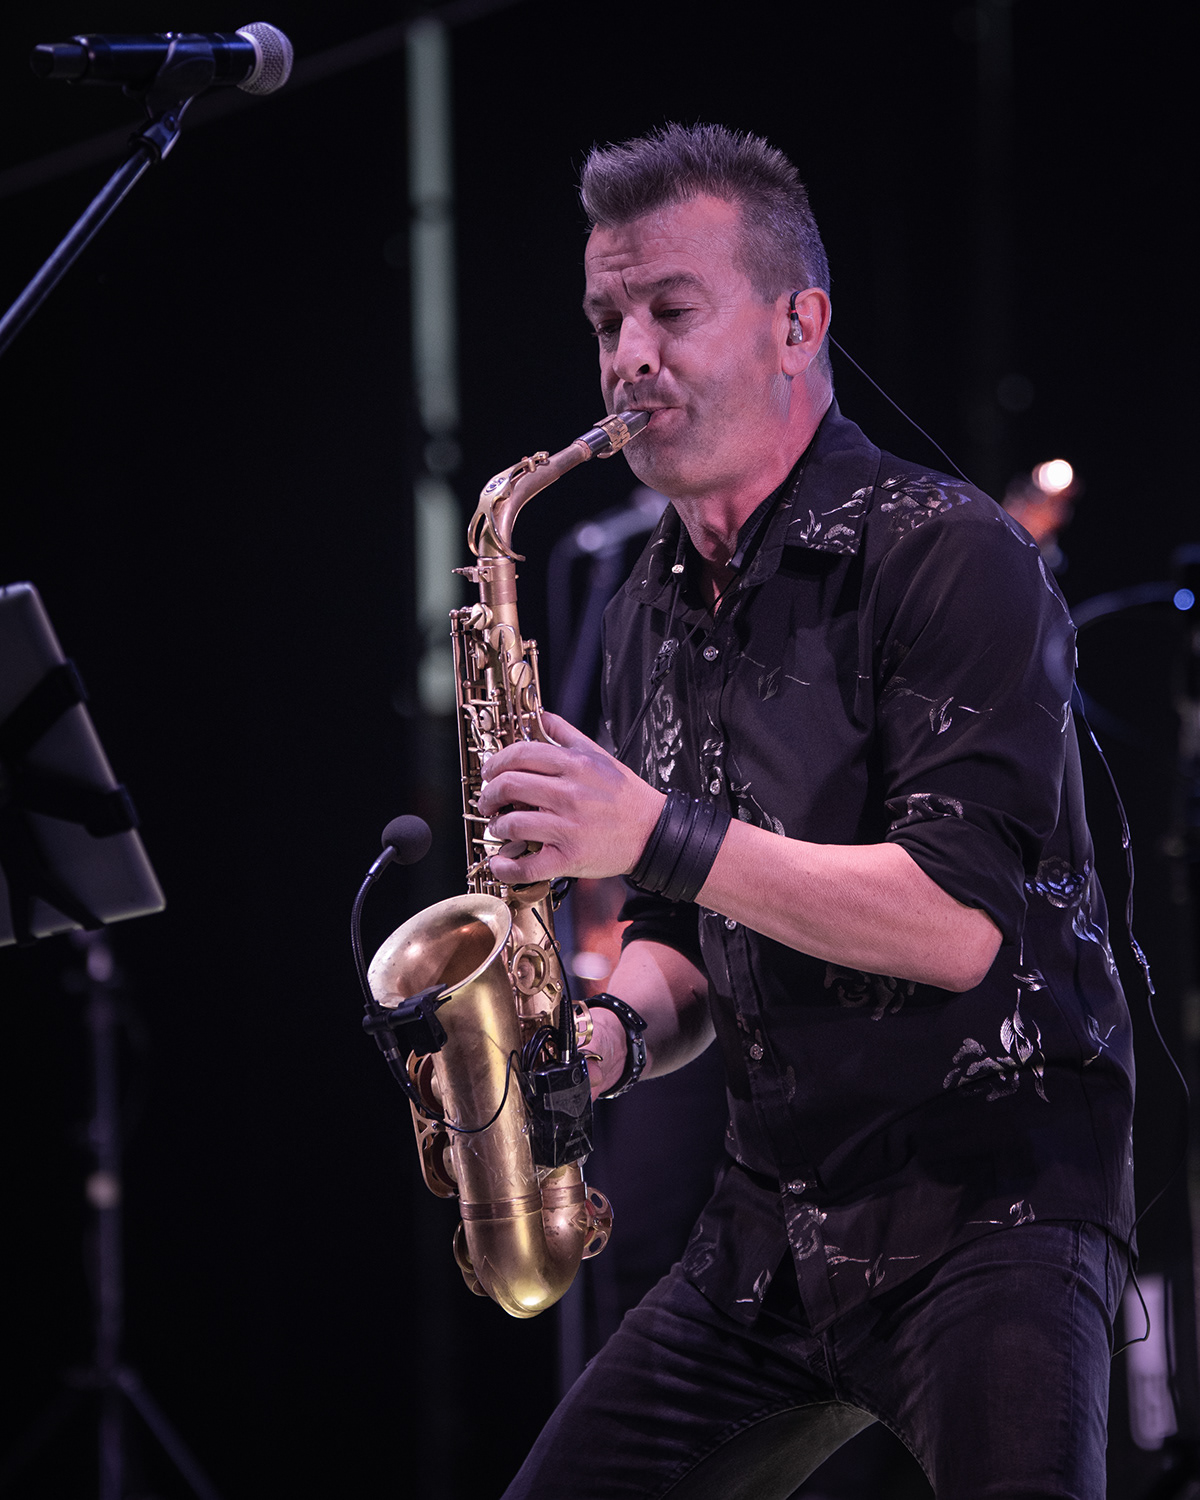 saxophone saxo musica festival party concierto saxofon trumpet jazz saxophonist